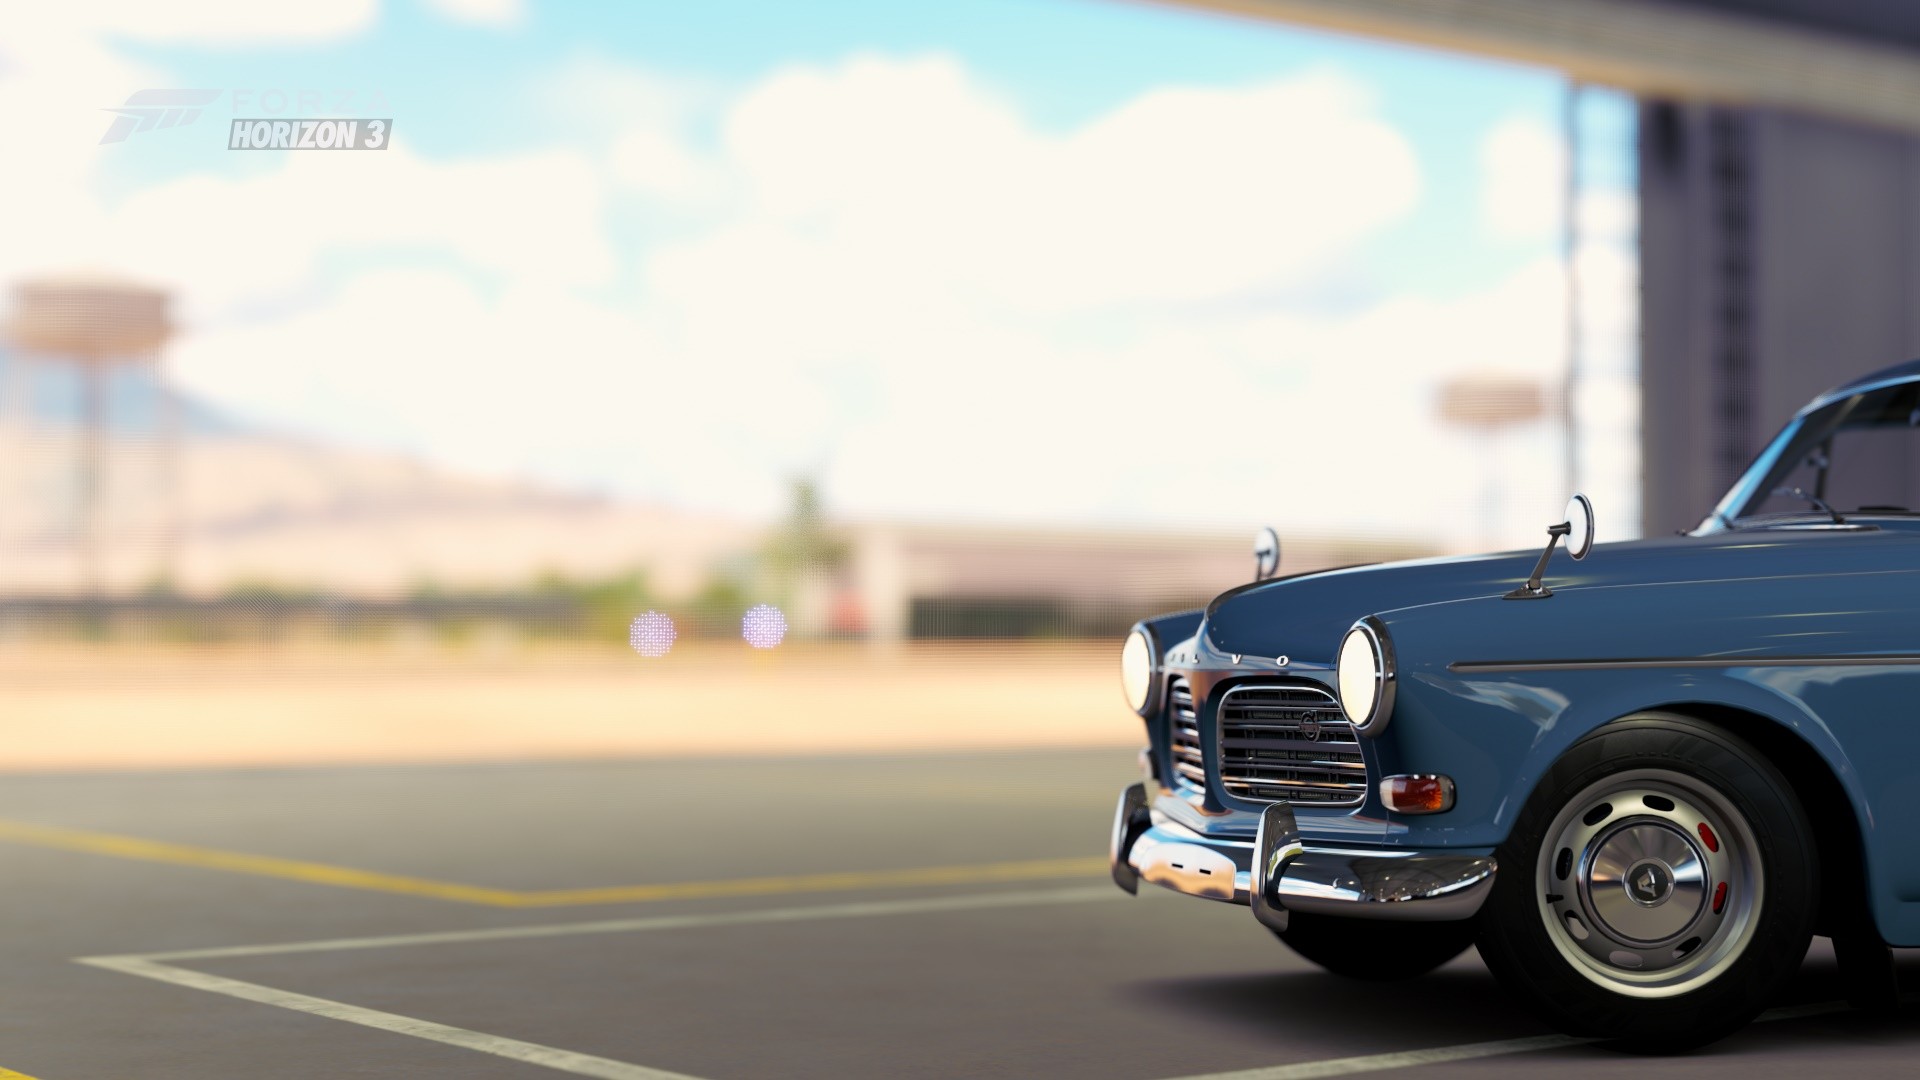 Wallpaper Volvo car in forza horizon 3 video game